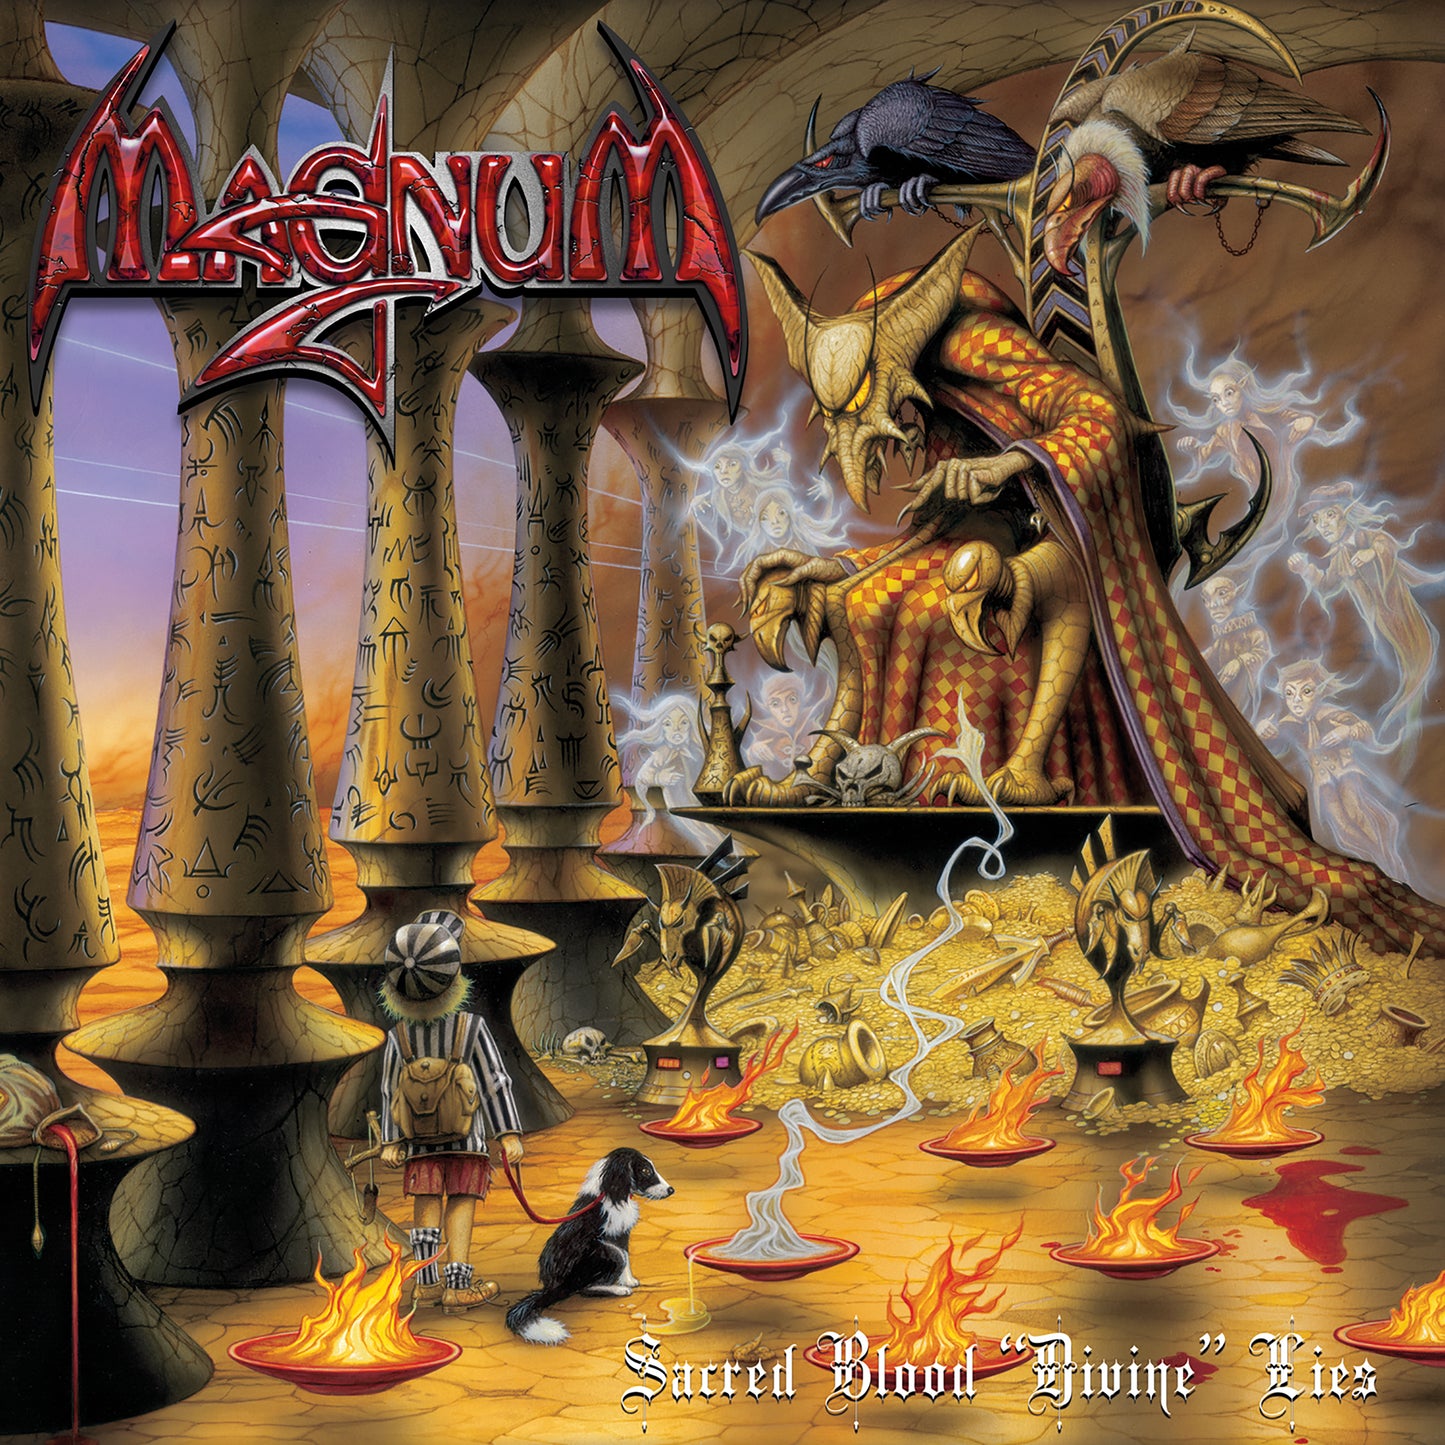 Magnum "Sacred Blood "Divine" Lies" CD